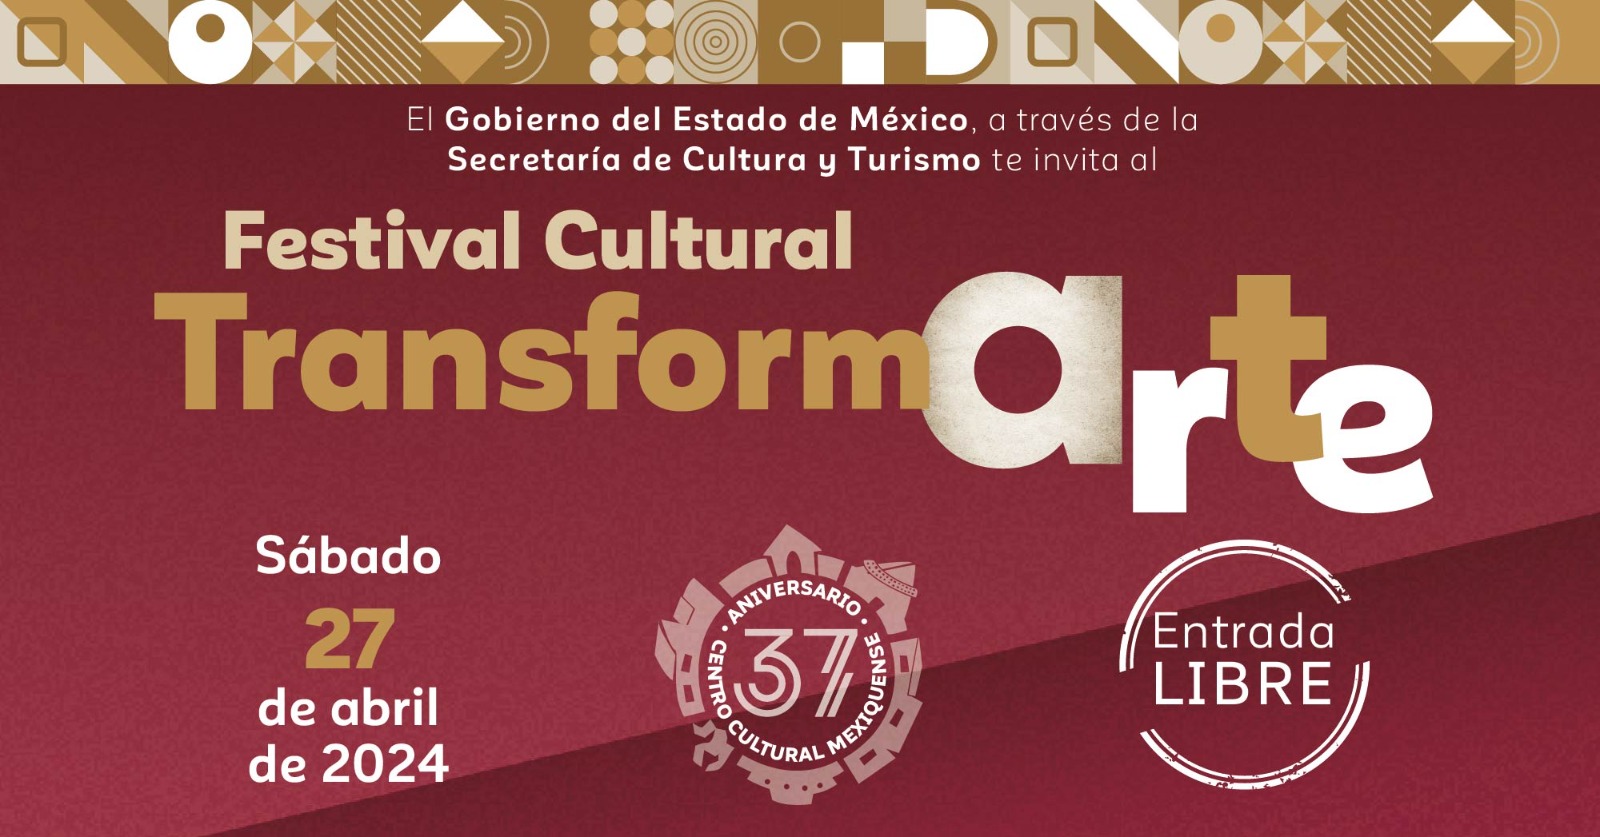 Asiste al Festival Cultural Transformarte en Toluca